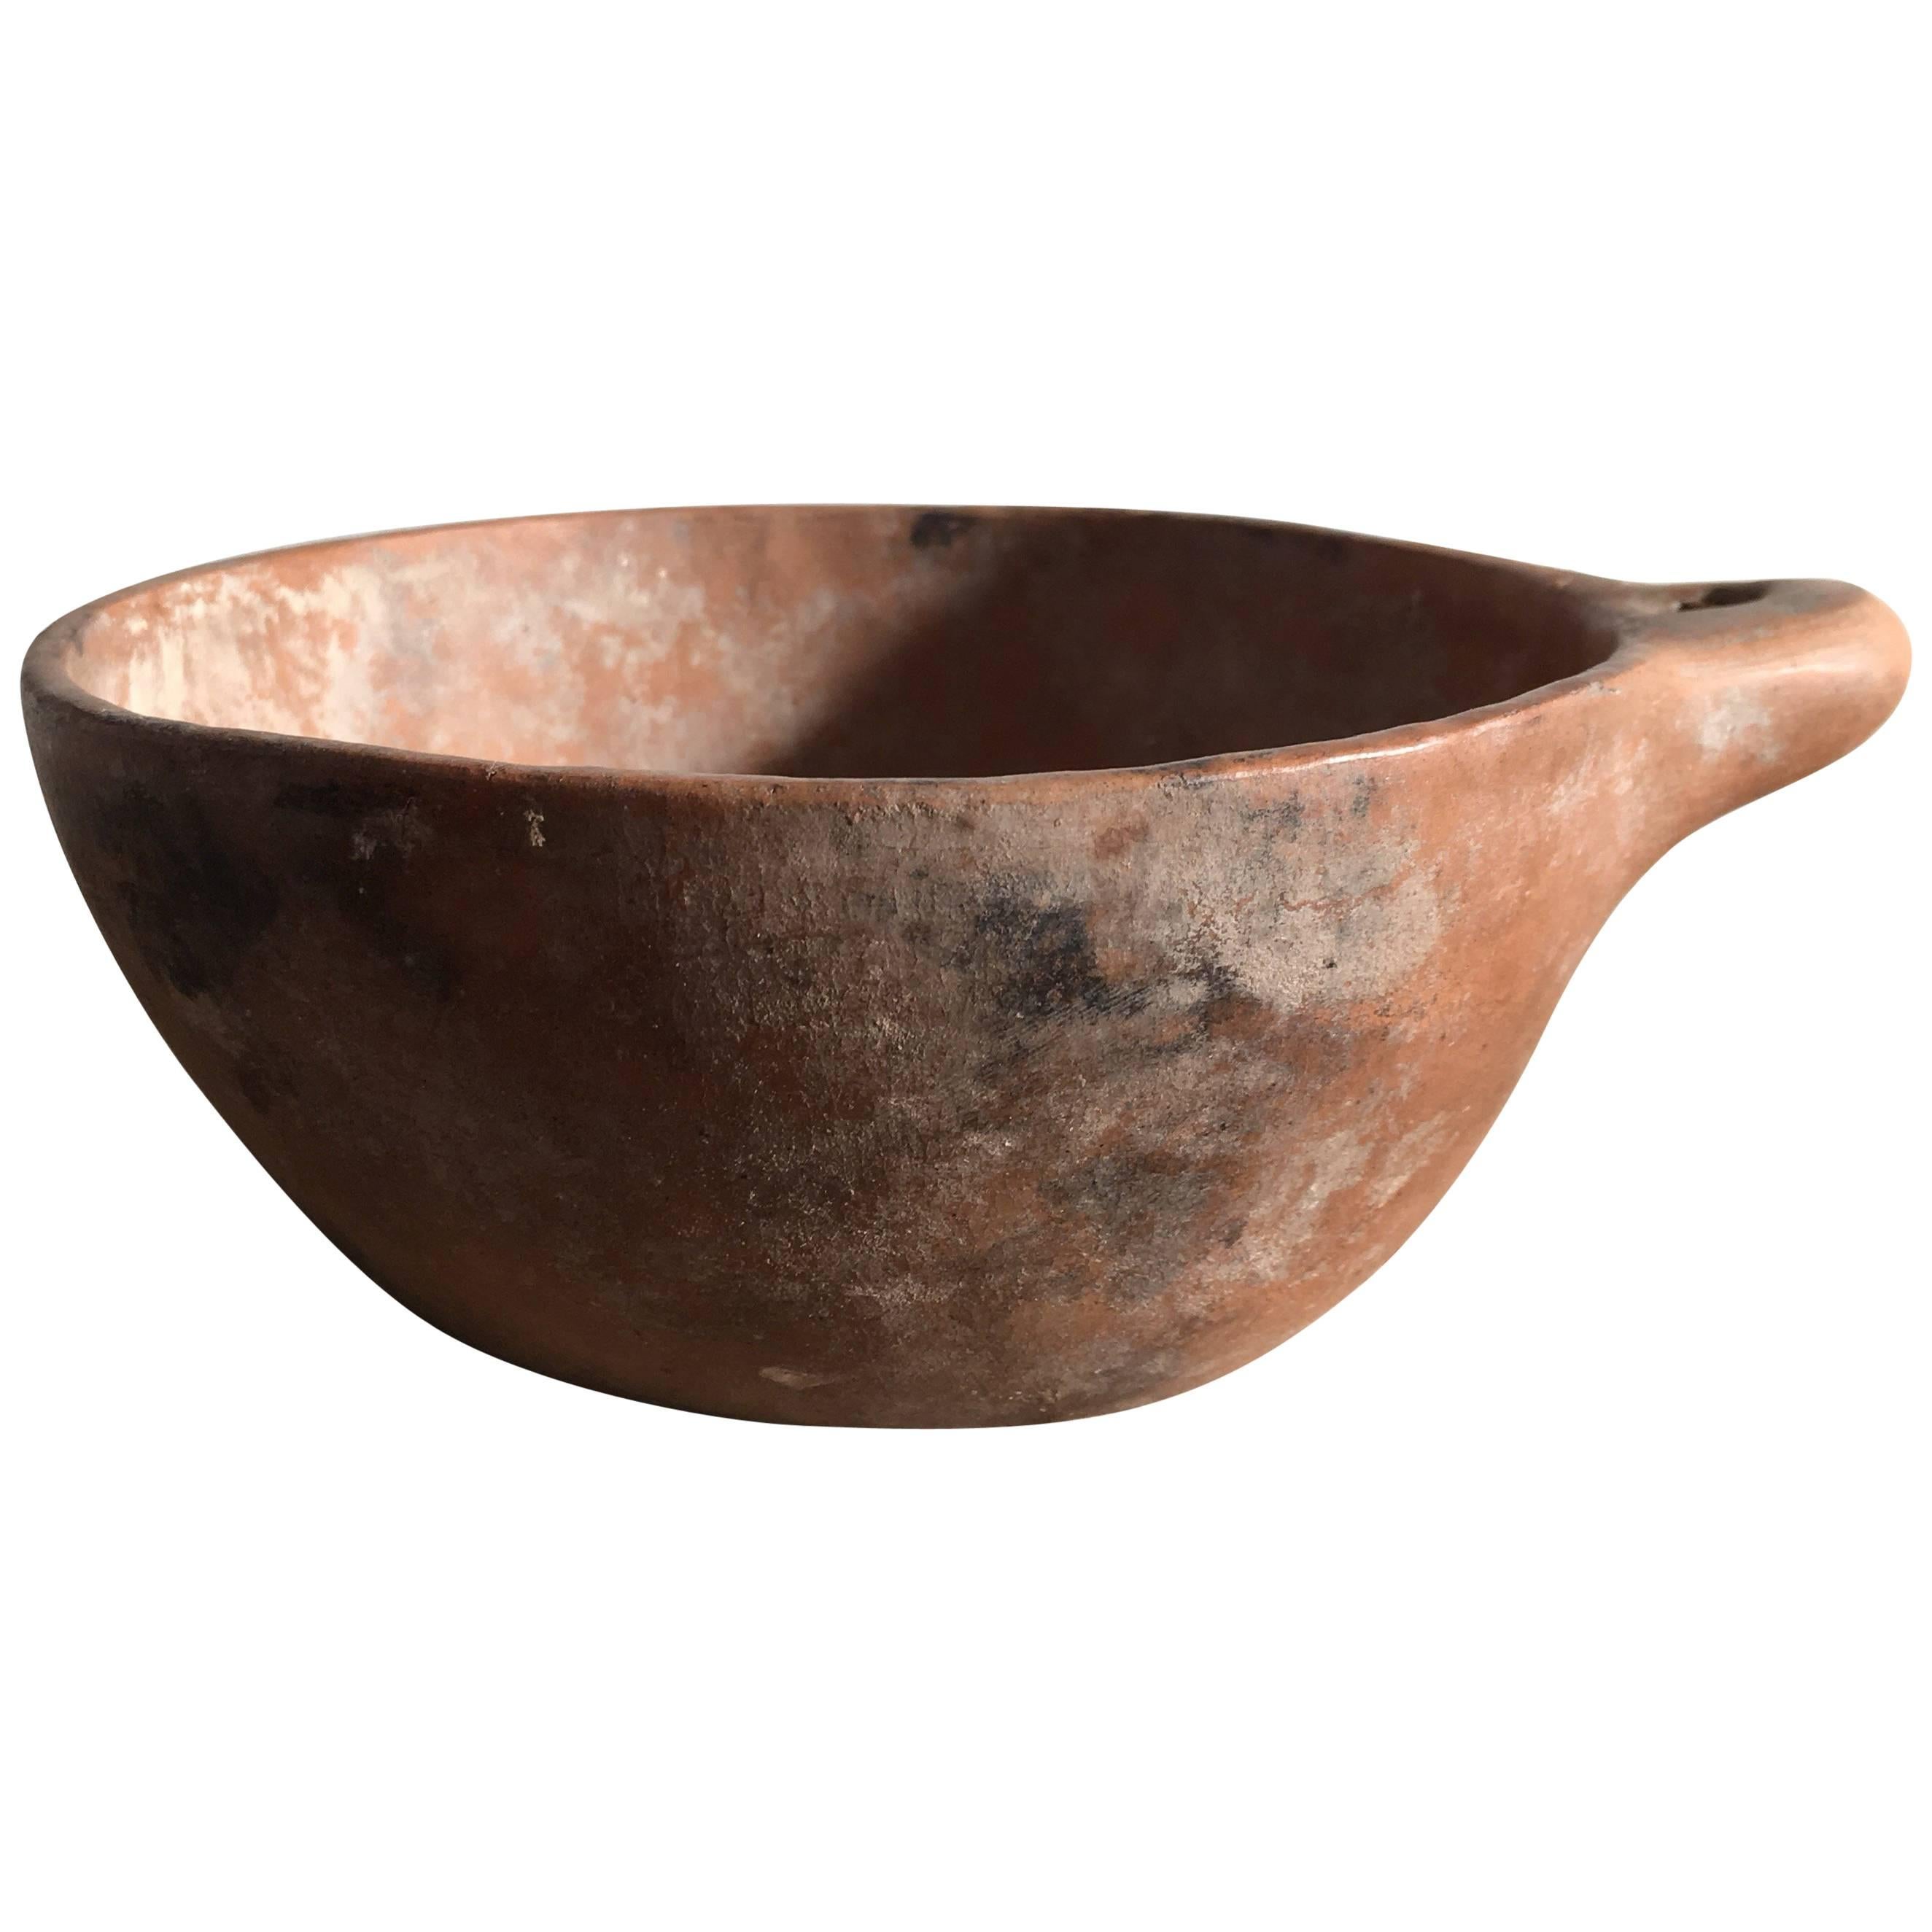 Ceramic Bowl from Mexico